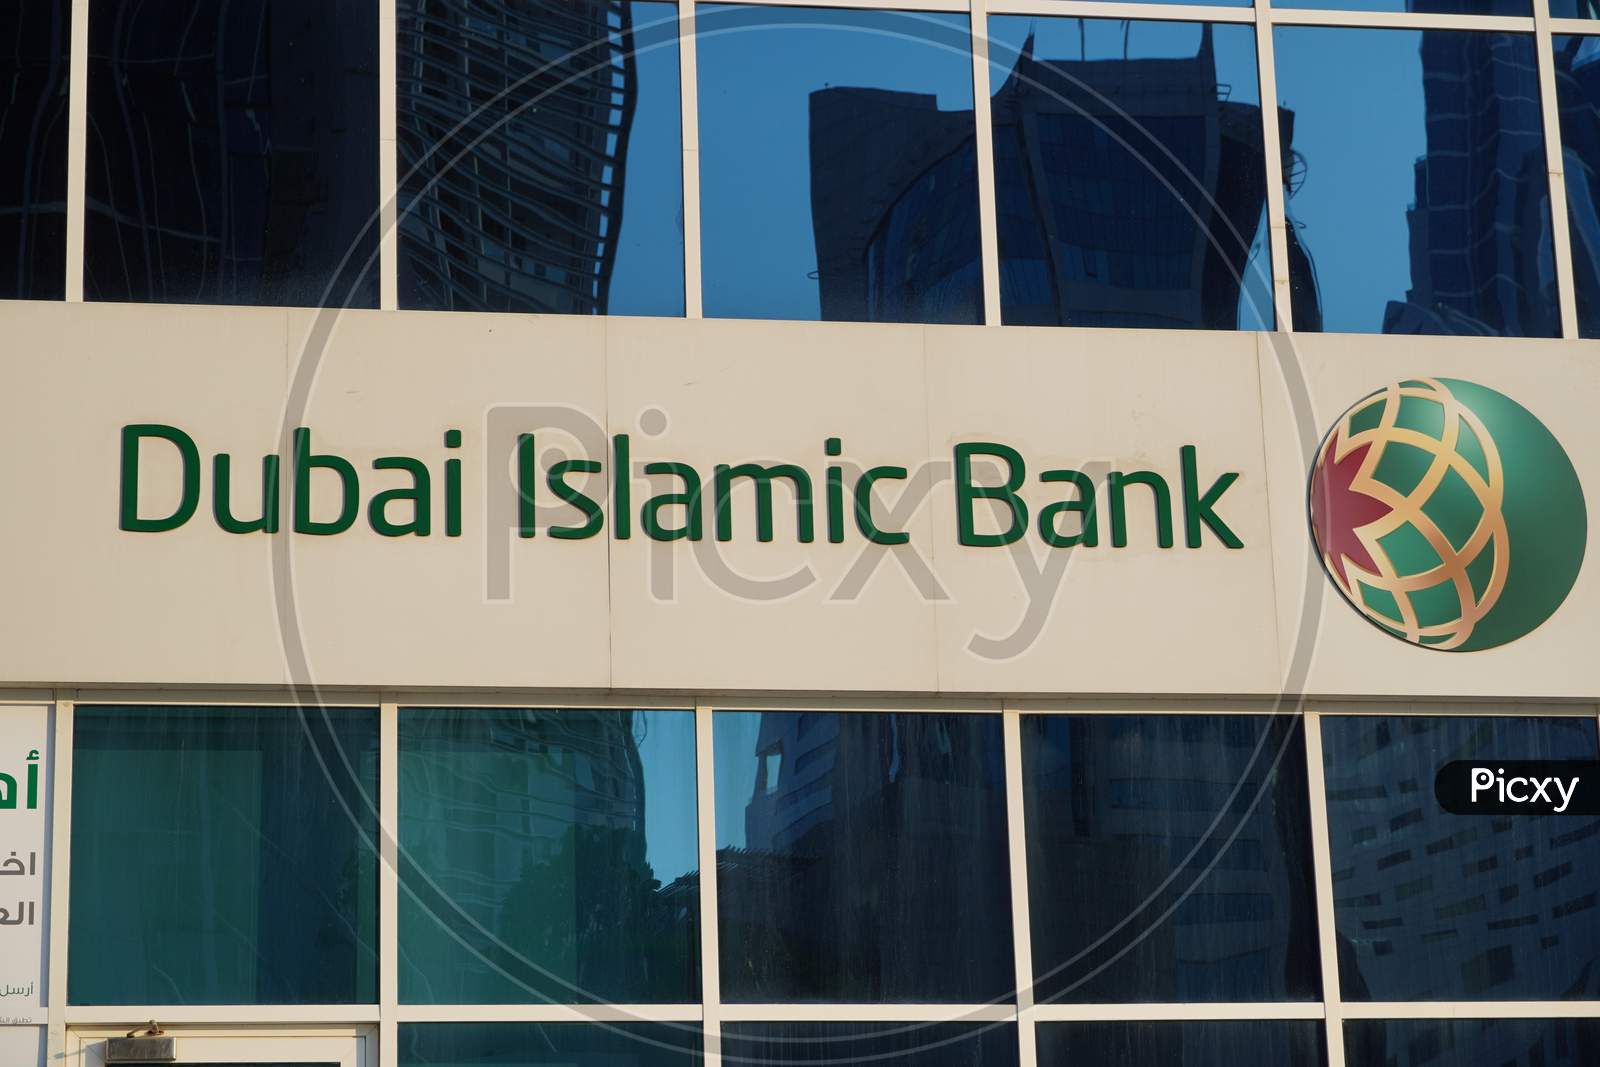 Dubai Uae December 2019 - Dubai Islamic Bank A Major Middle Eastern Banks Building Sign Logo On Large Building On A Sunny Day.